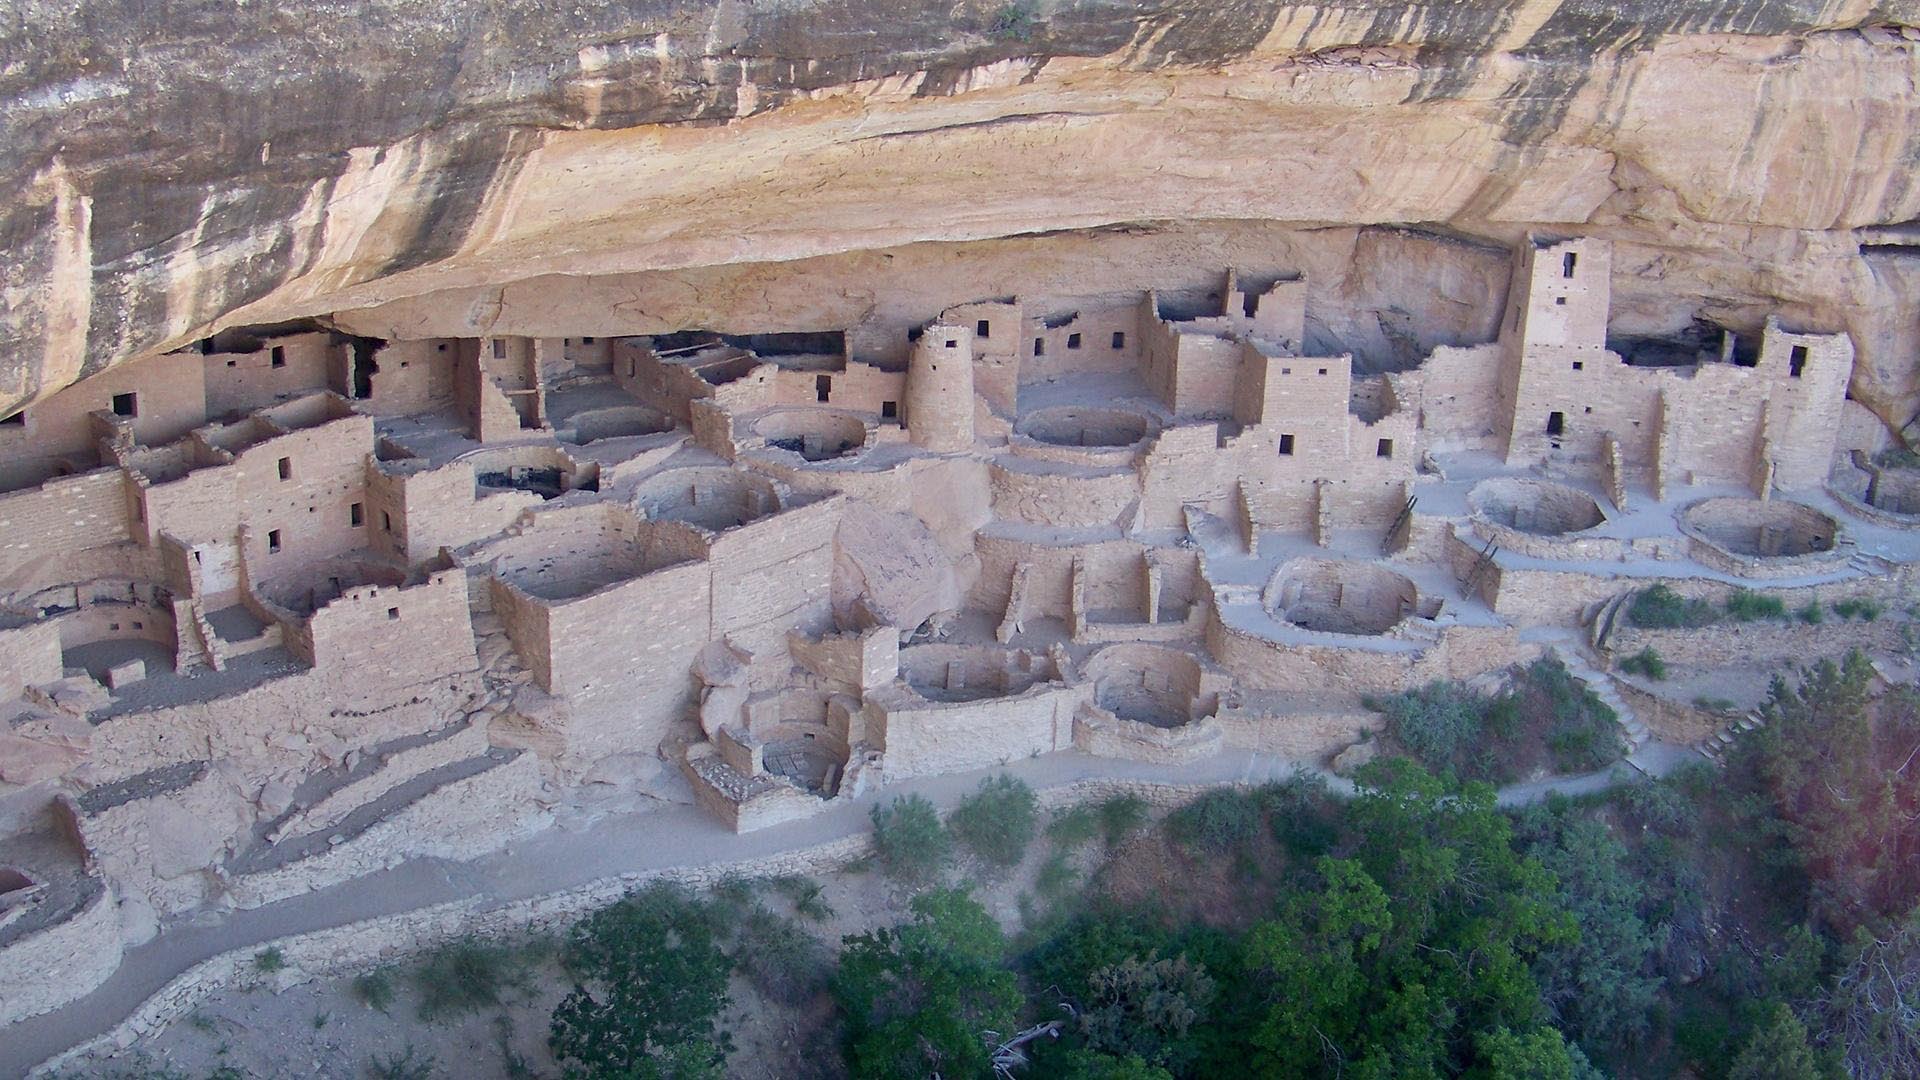 Structures of a Pueblo village next to a cliff.